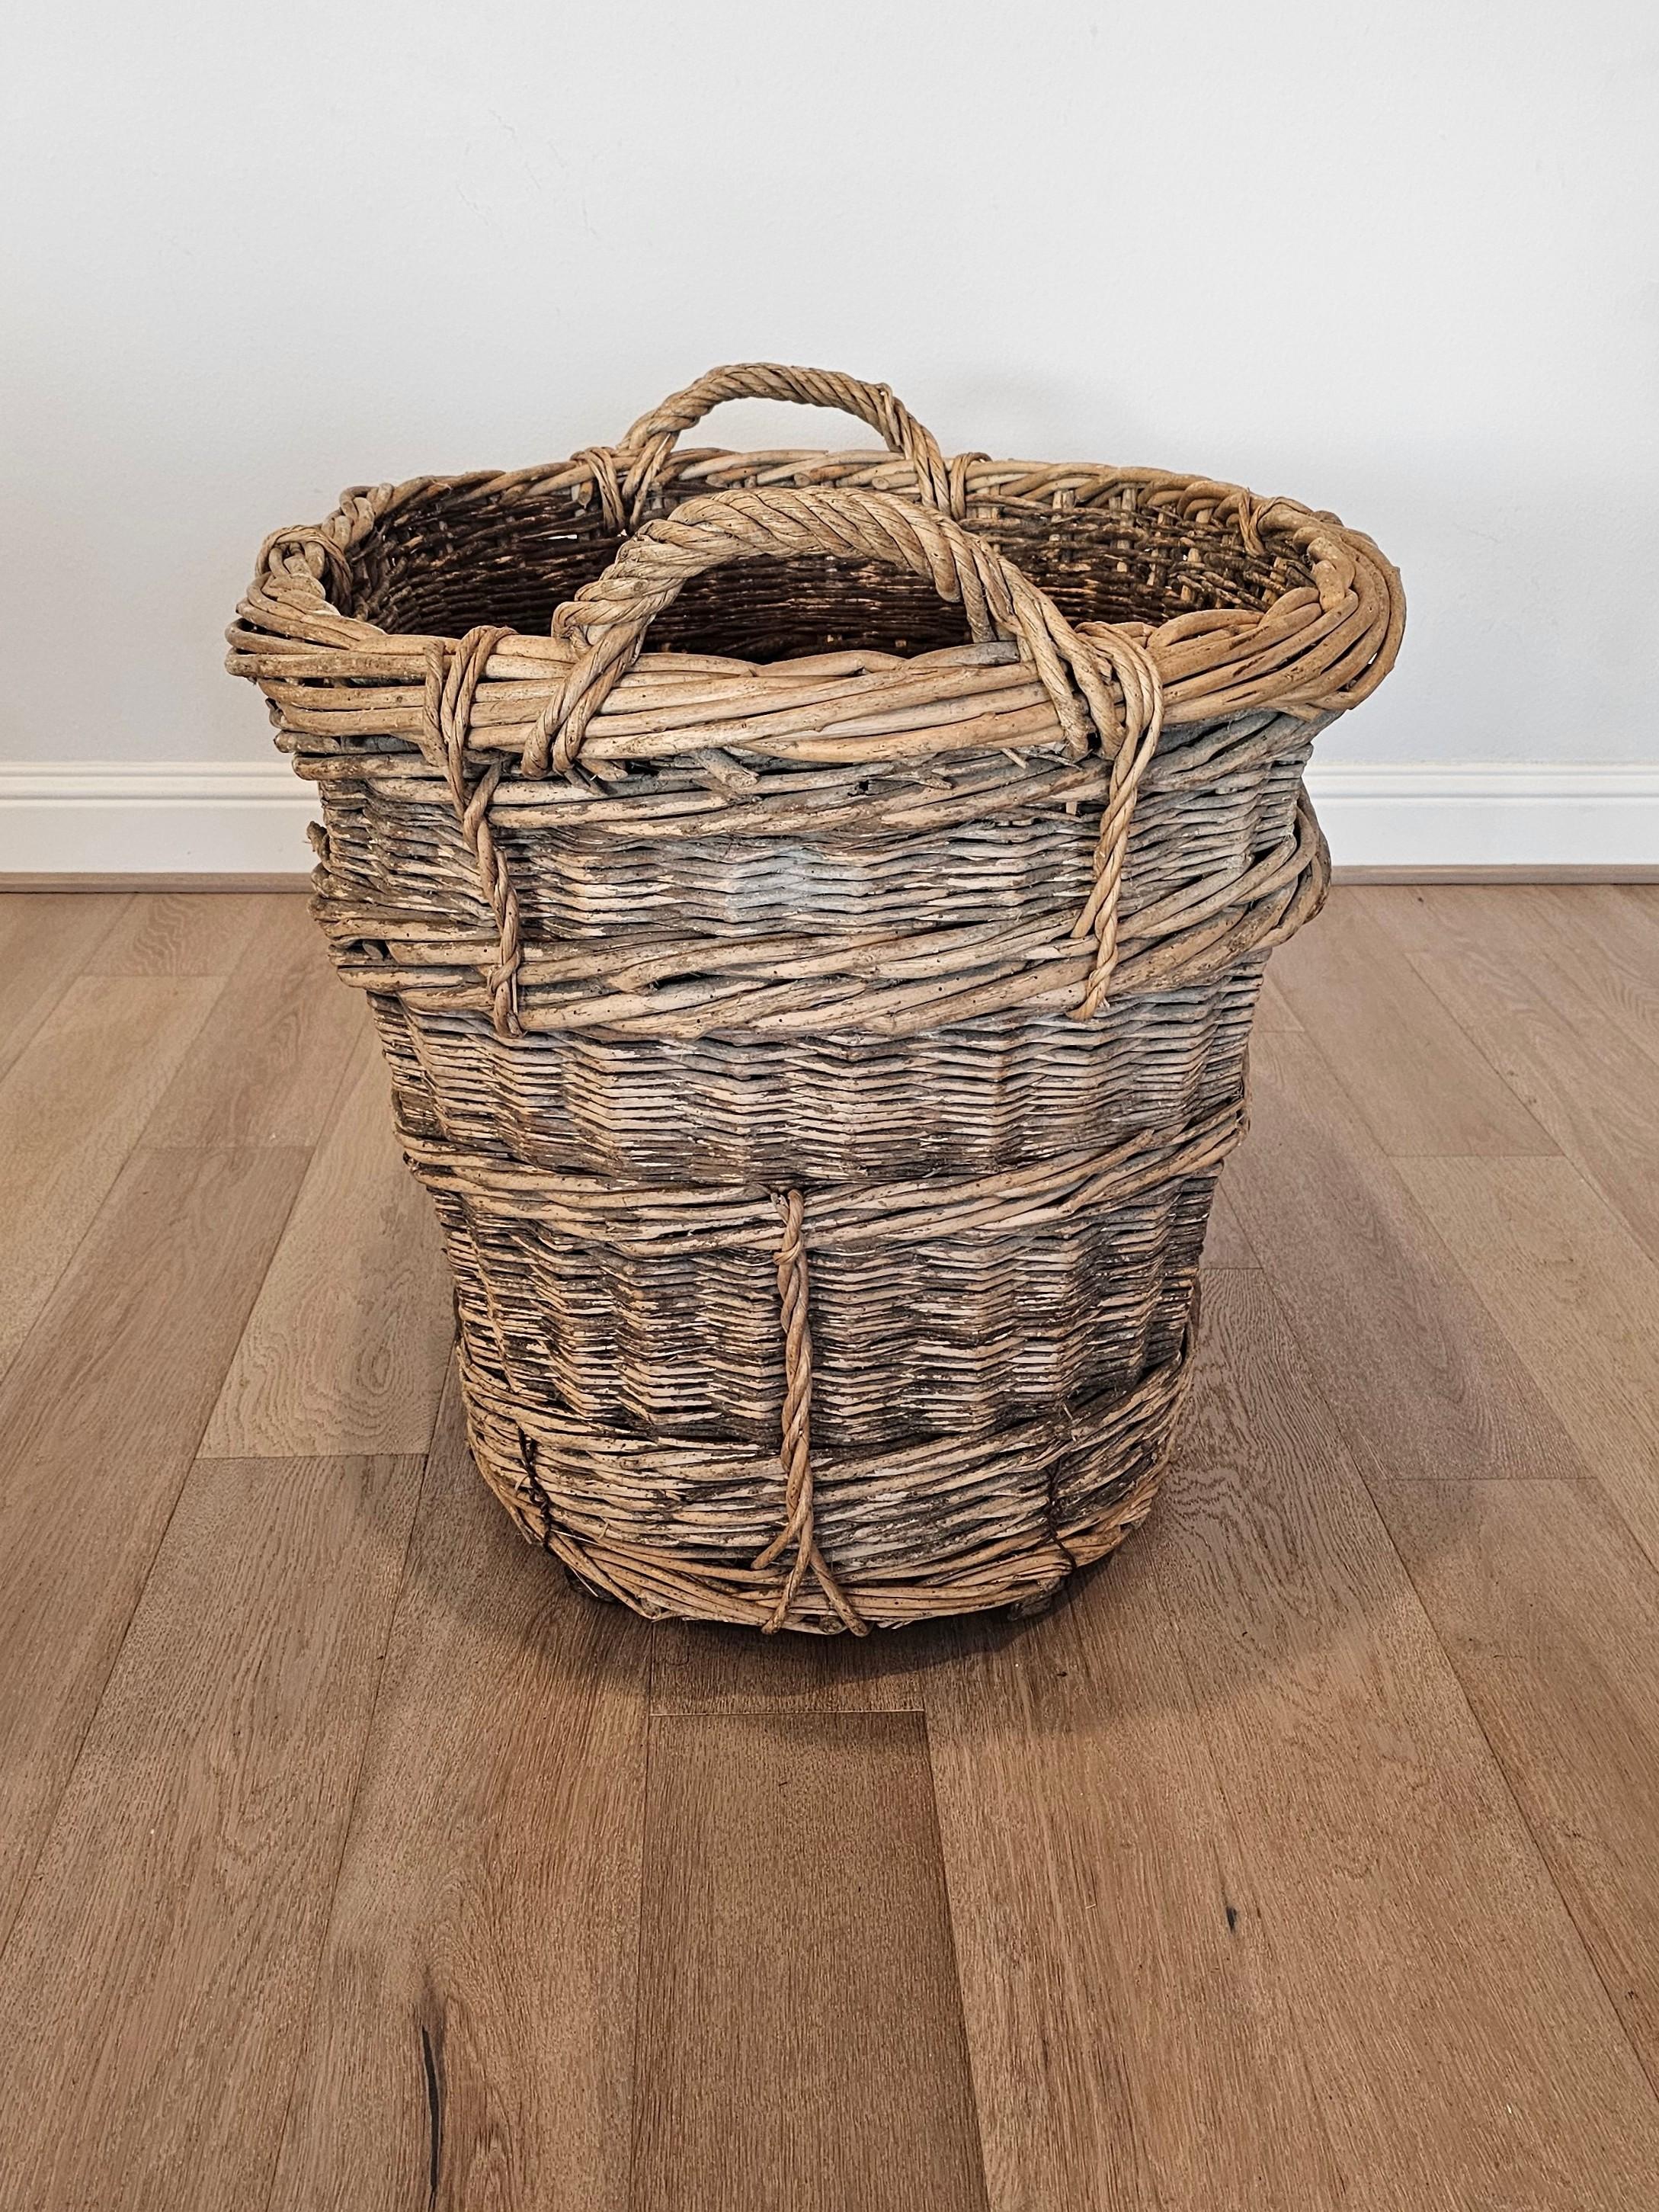 Hand-Woven Monumental Antique French Vineyard Grape Harvesting Wicker Basket